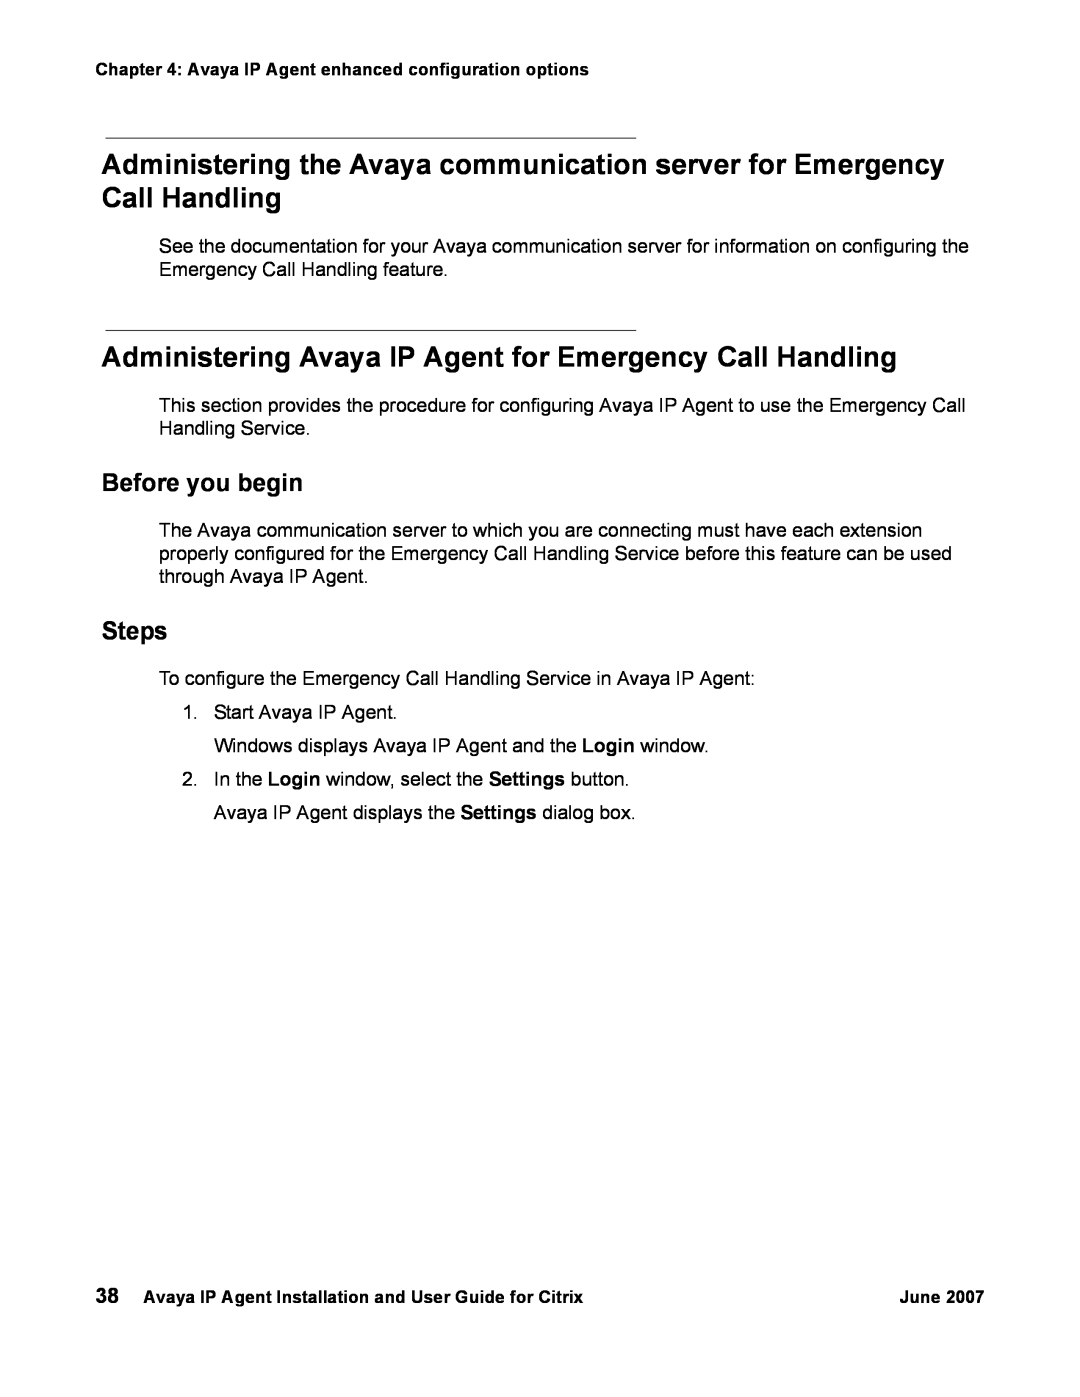 Avaya 7 manual Administering Avaya IP Agent for Emergency Call Handling, Steps, Before you begin 